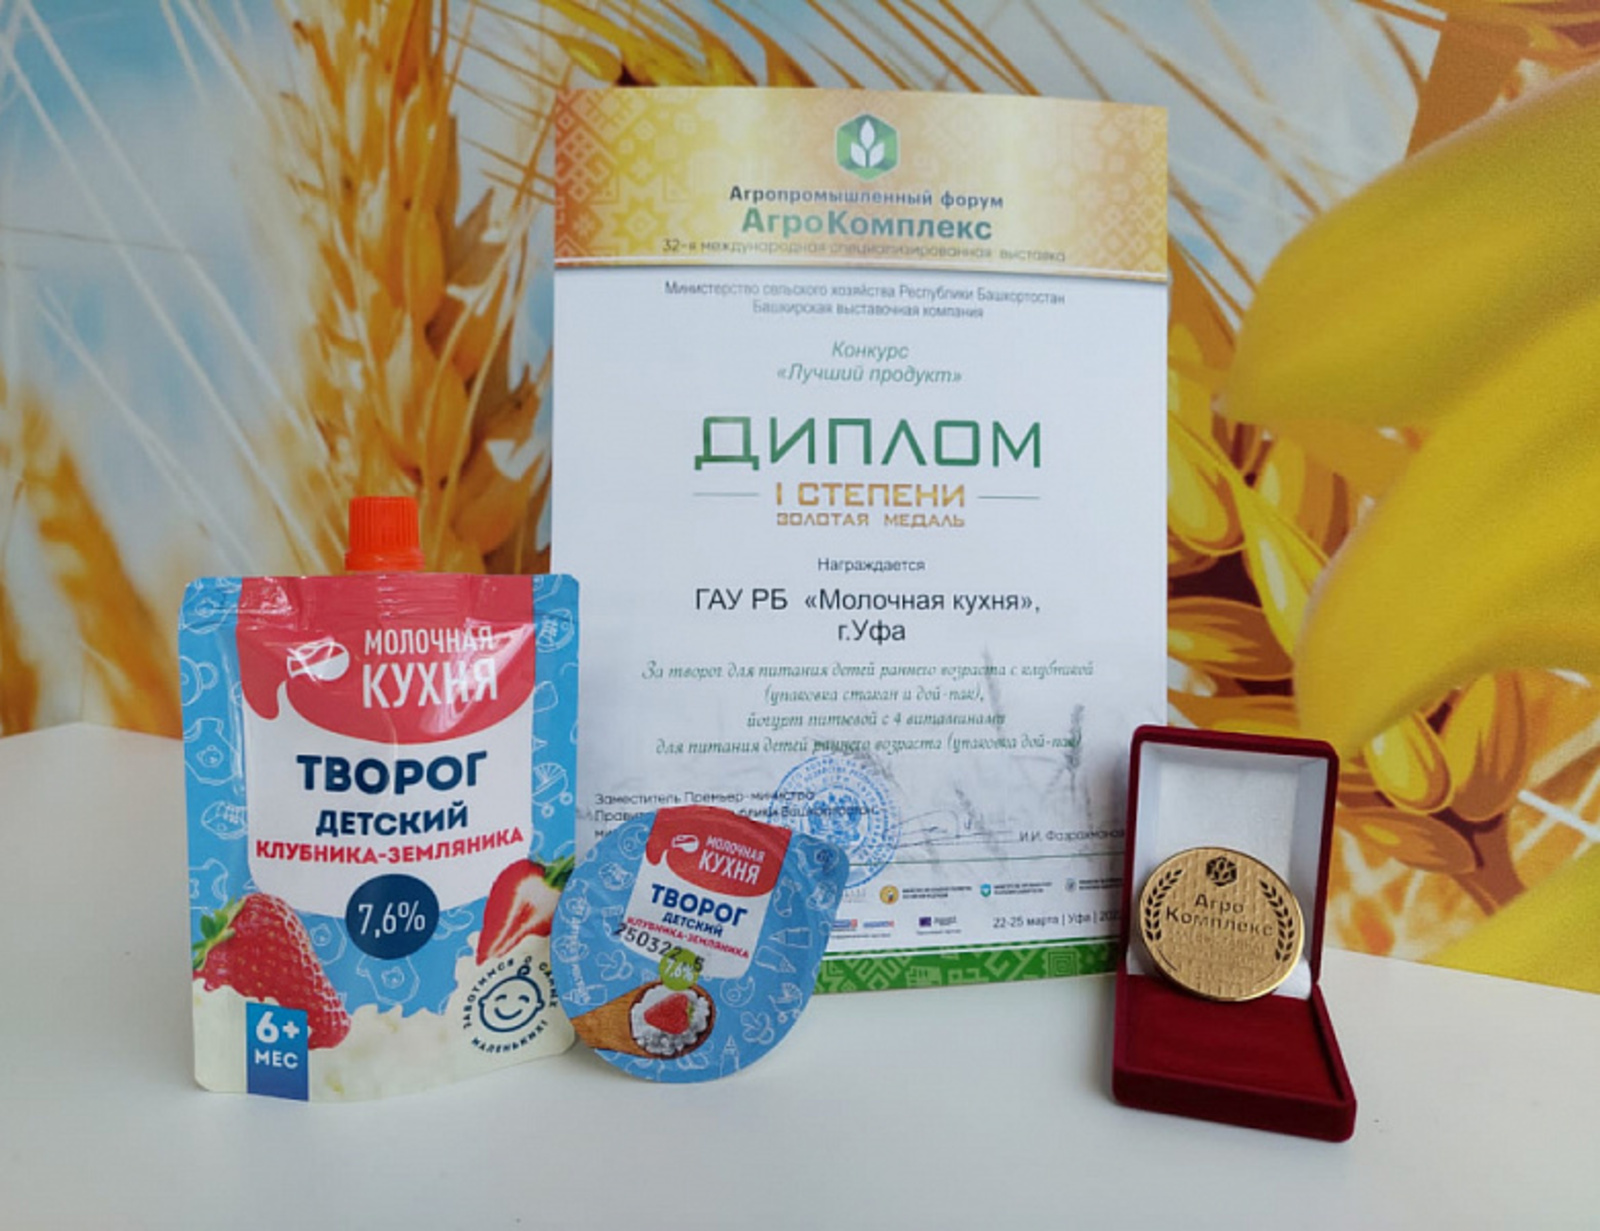 «Молочная кухня» Башкирии получила золотую медаль